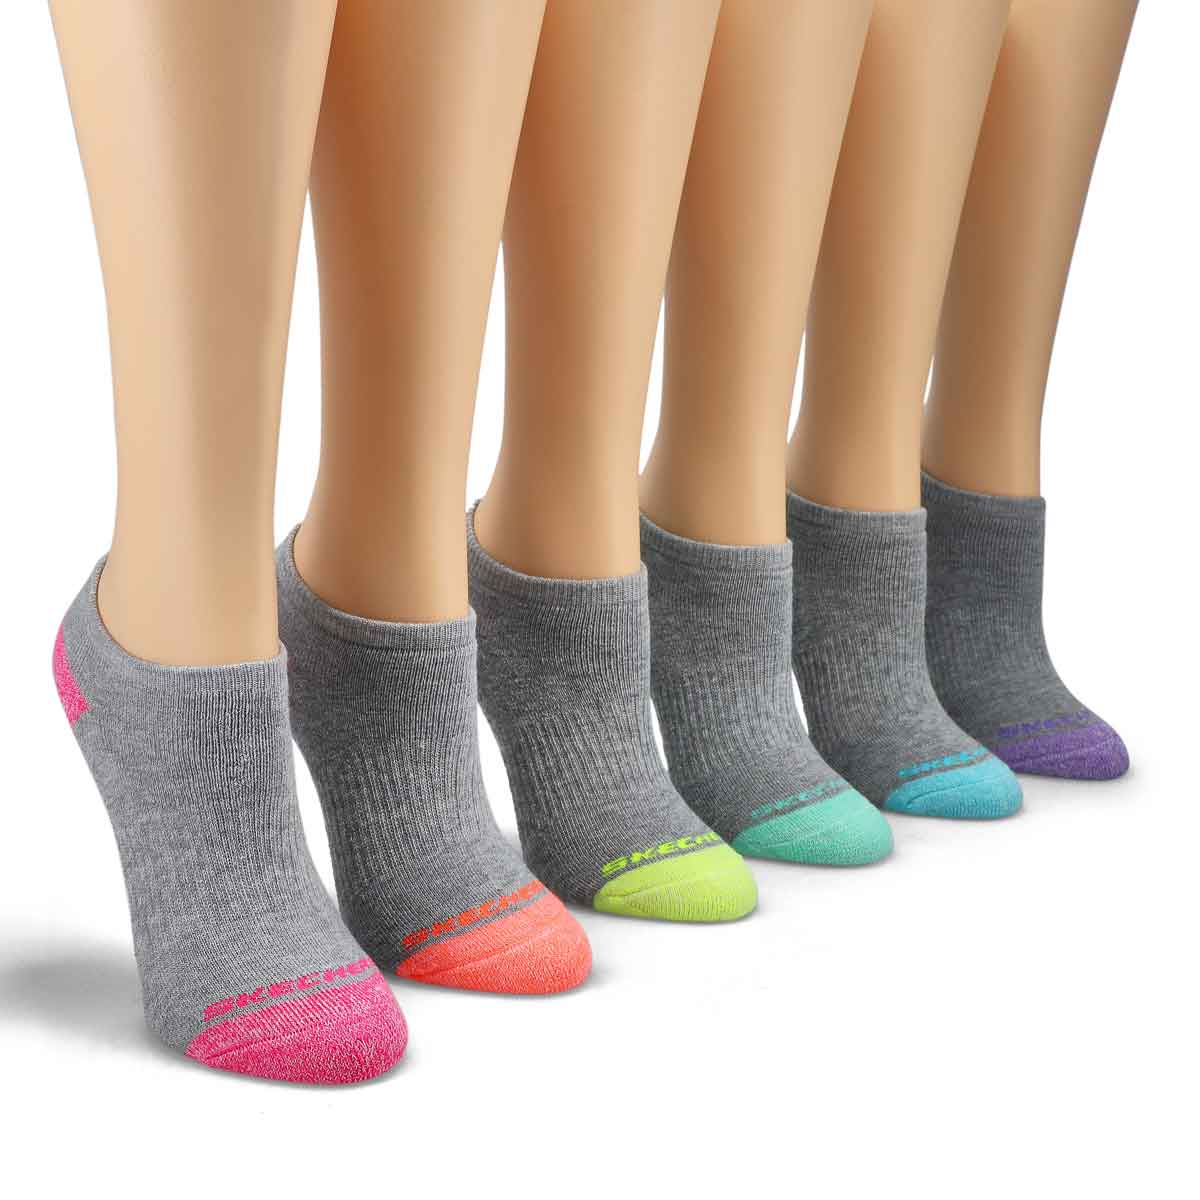 Grey cotton no-show socks, Accessories